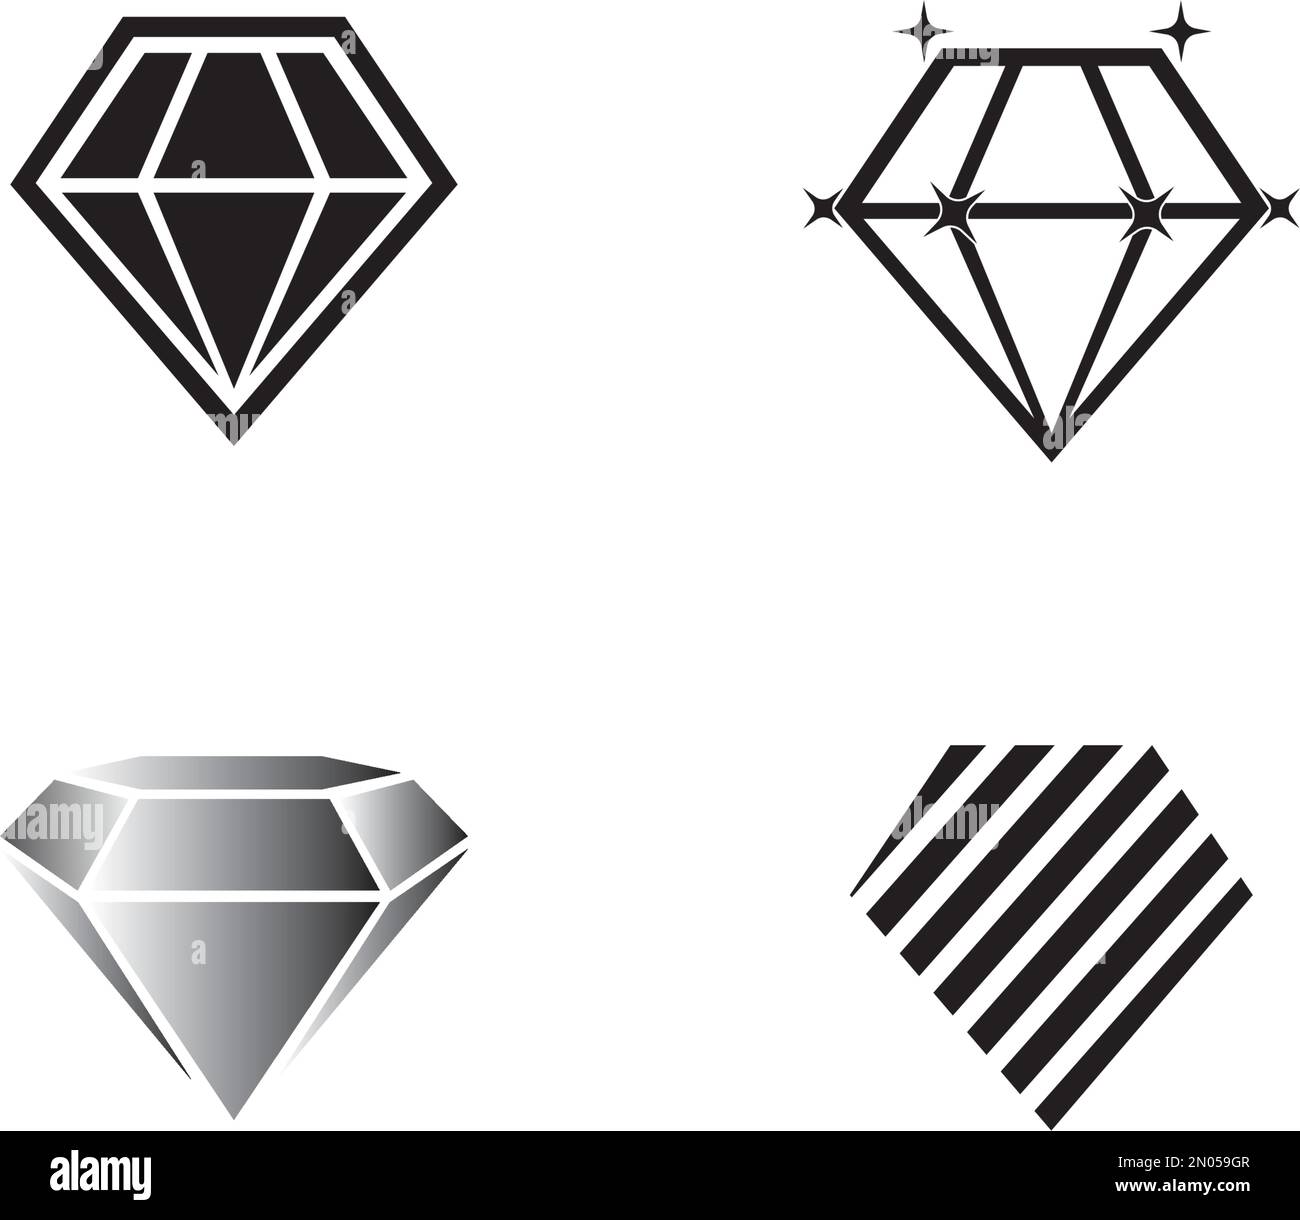 Diamond logo vector design template illustration Stock Vector Image ...